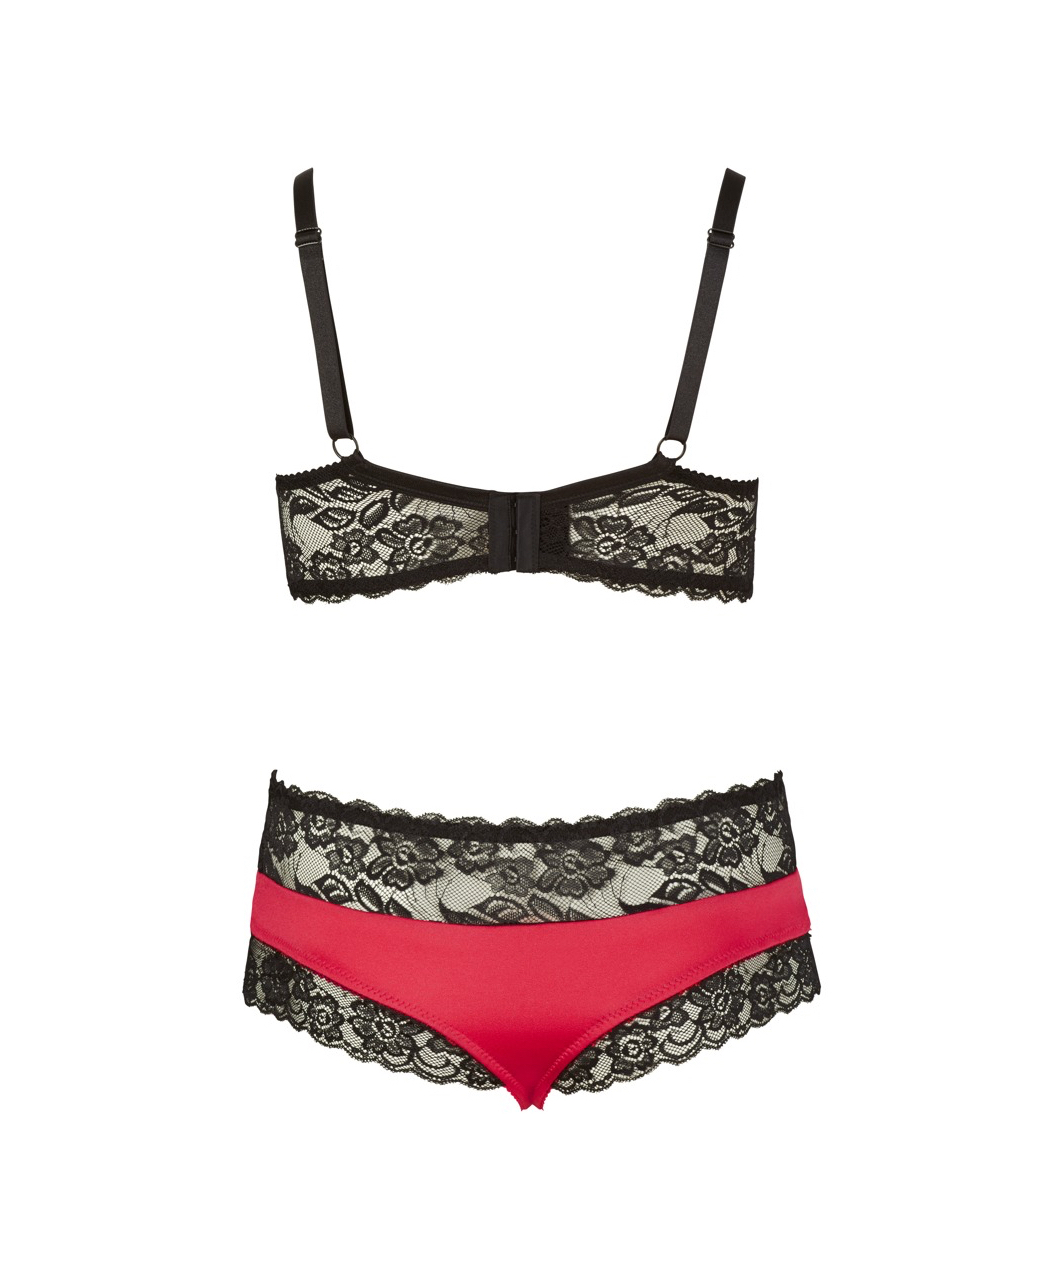 Cottelli Lingerie red satin lingerie set with black lace